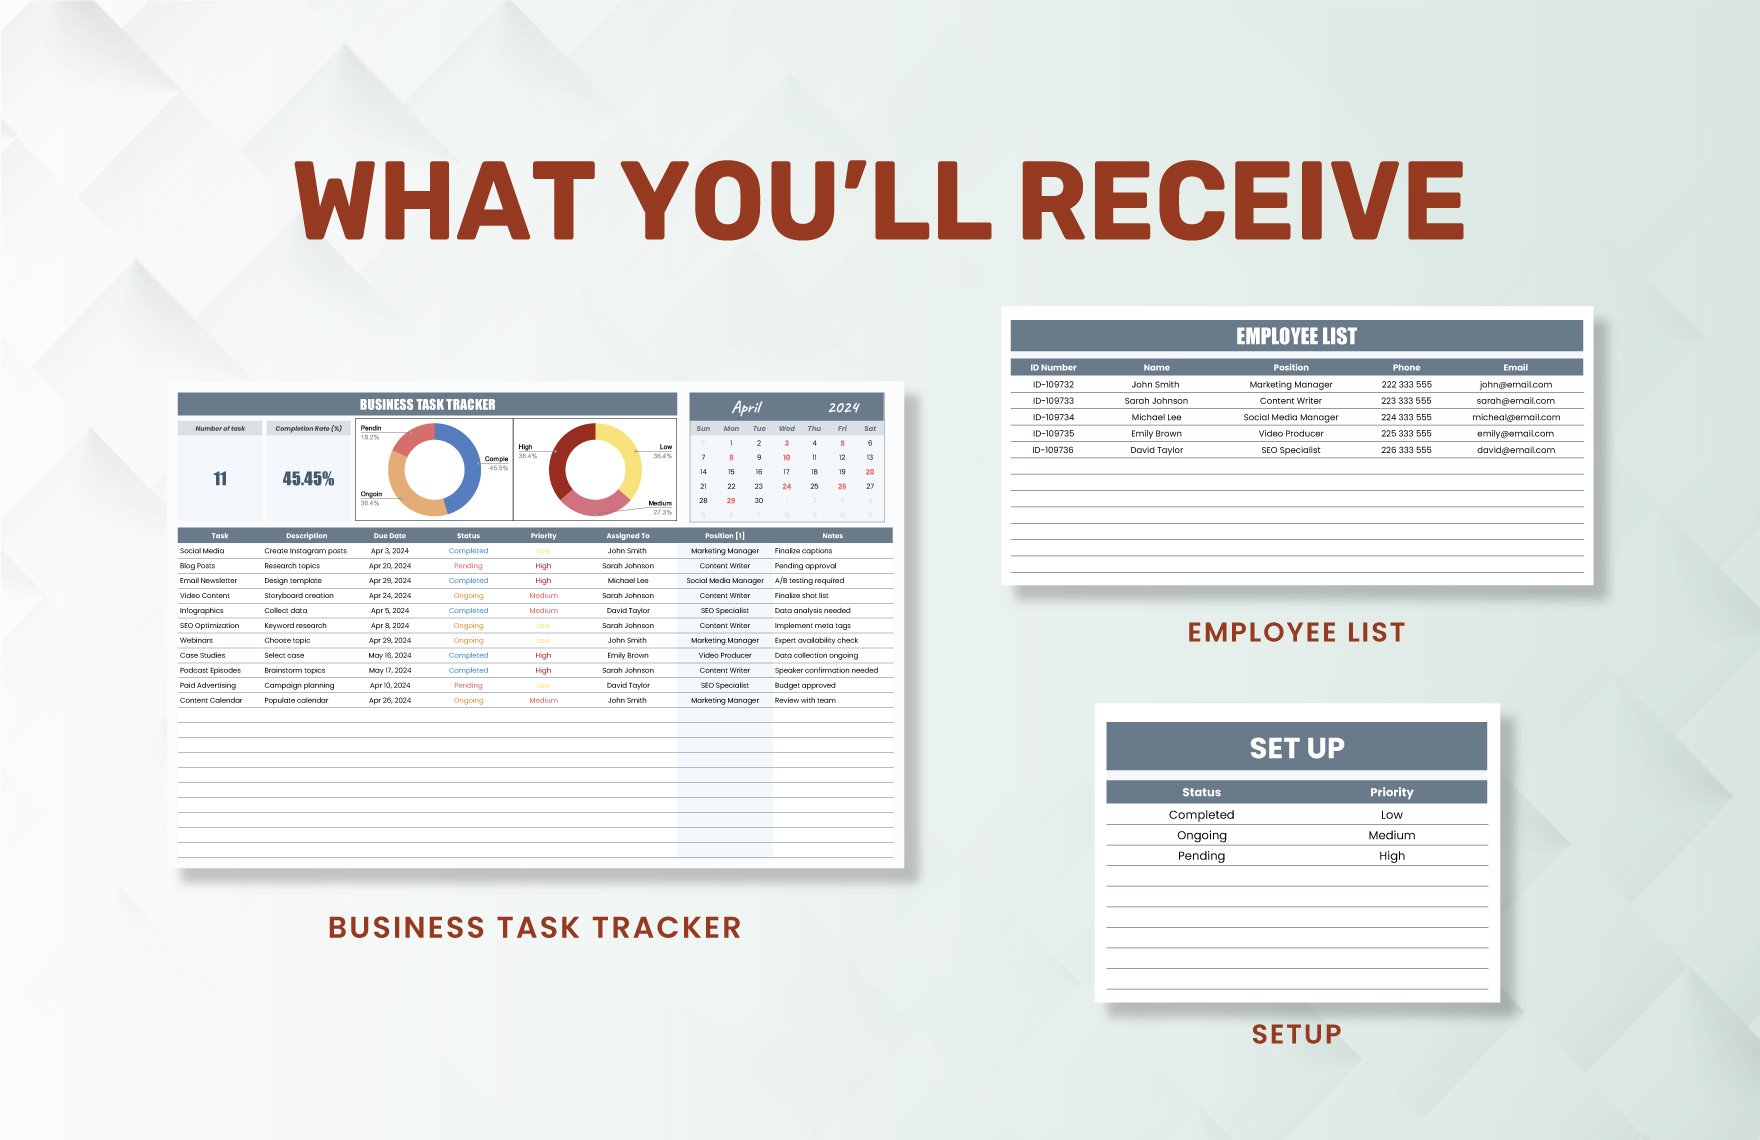 Business Task Tracker Template